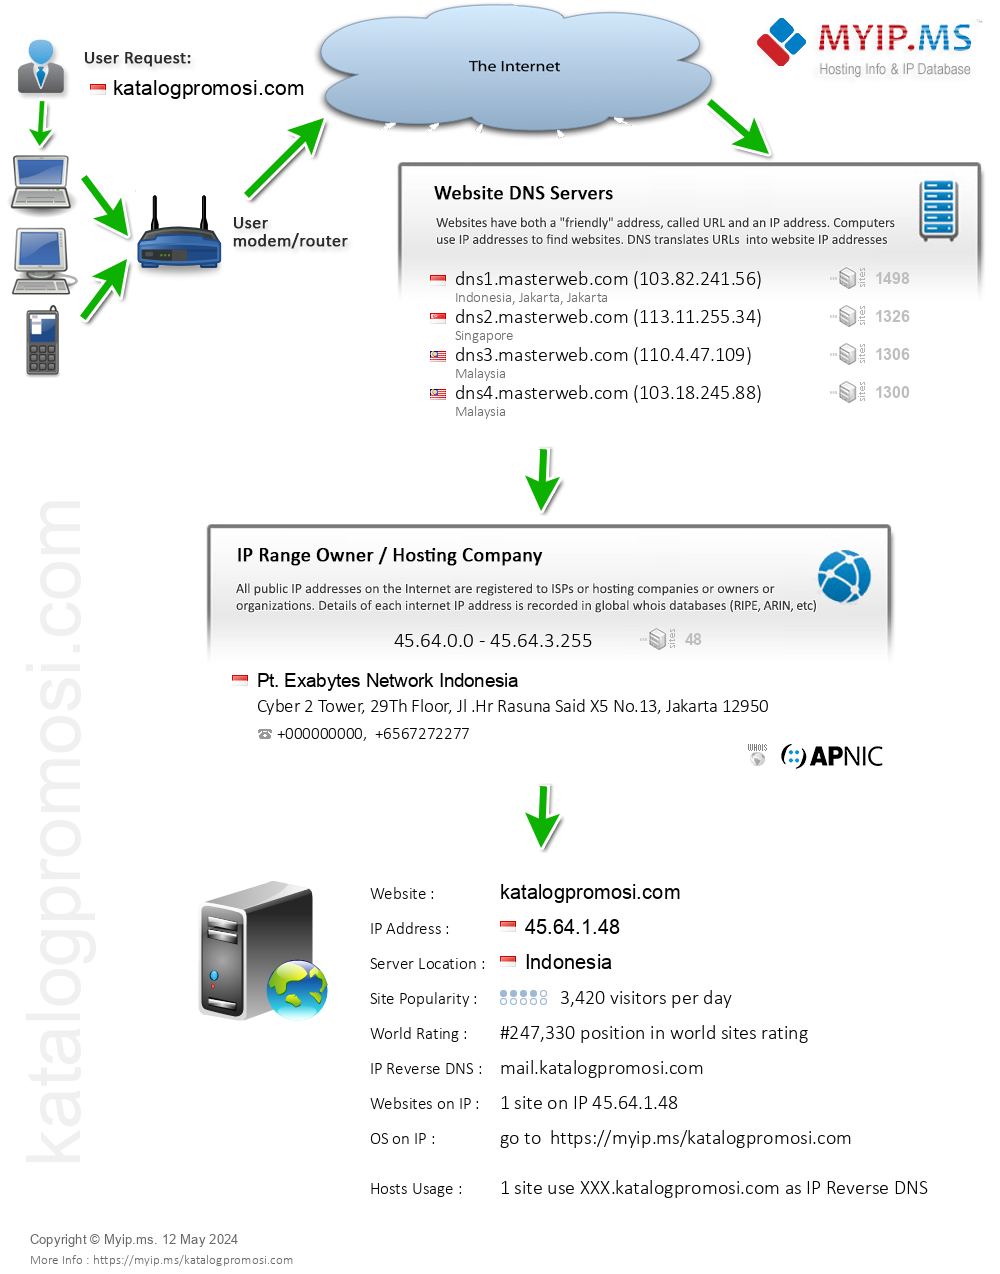 Katalogpromosi.com - Website Hosting Visual IP Diagram